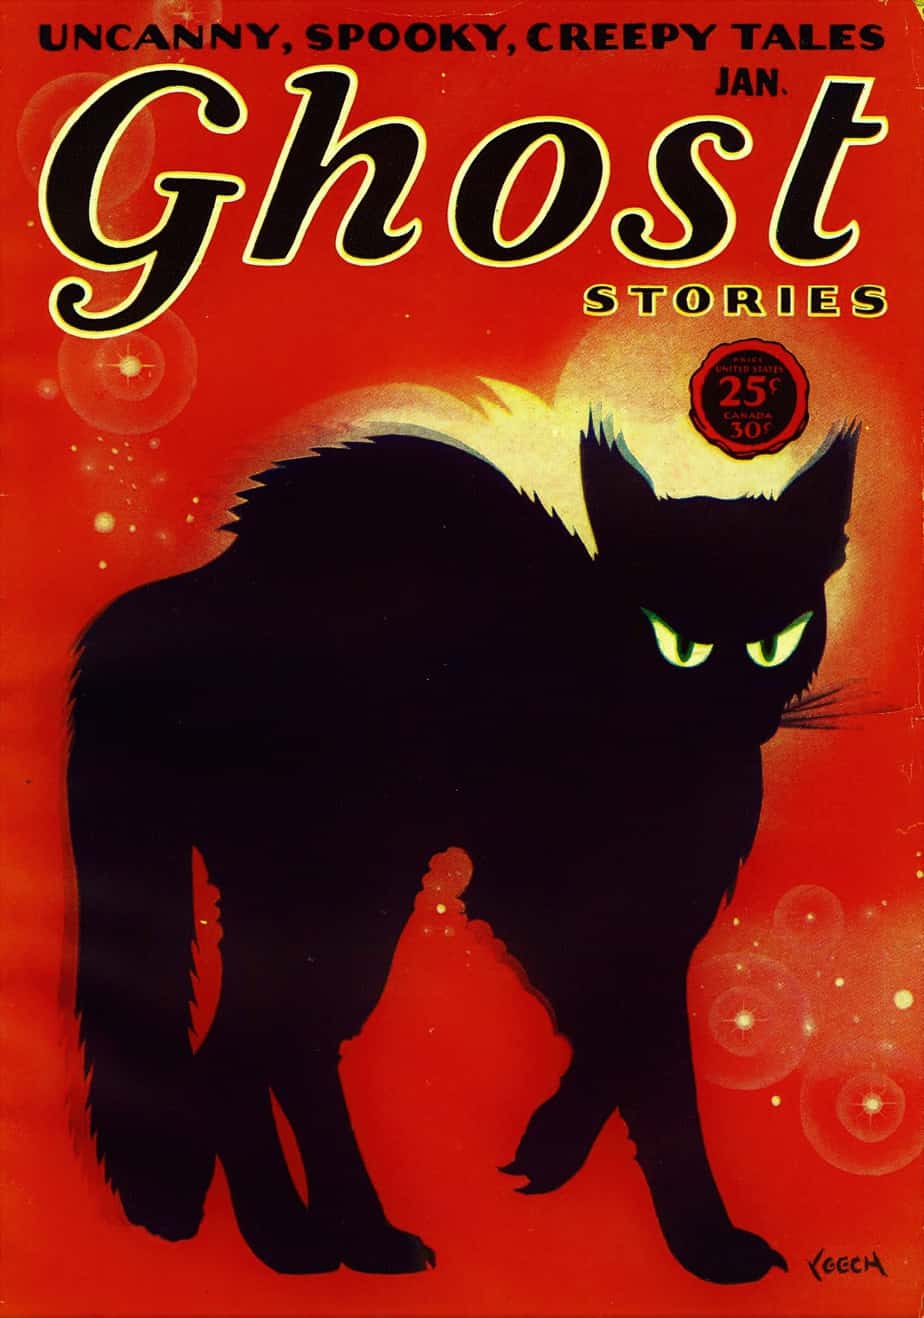 Uncanny, Spooky, Creepy Tales Ghost Stories Magazine